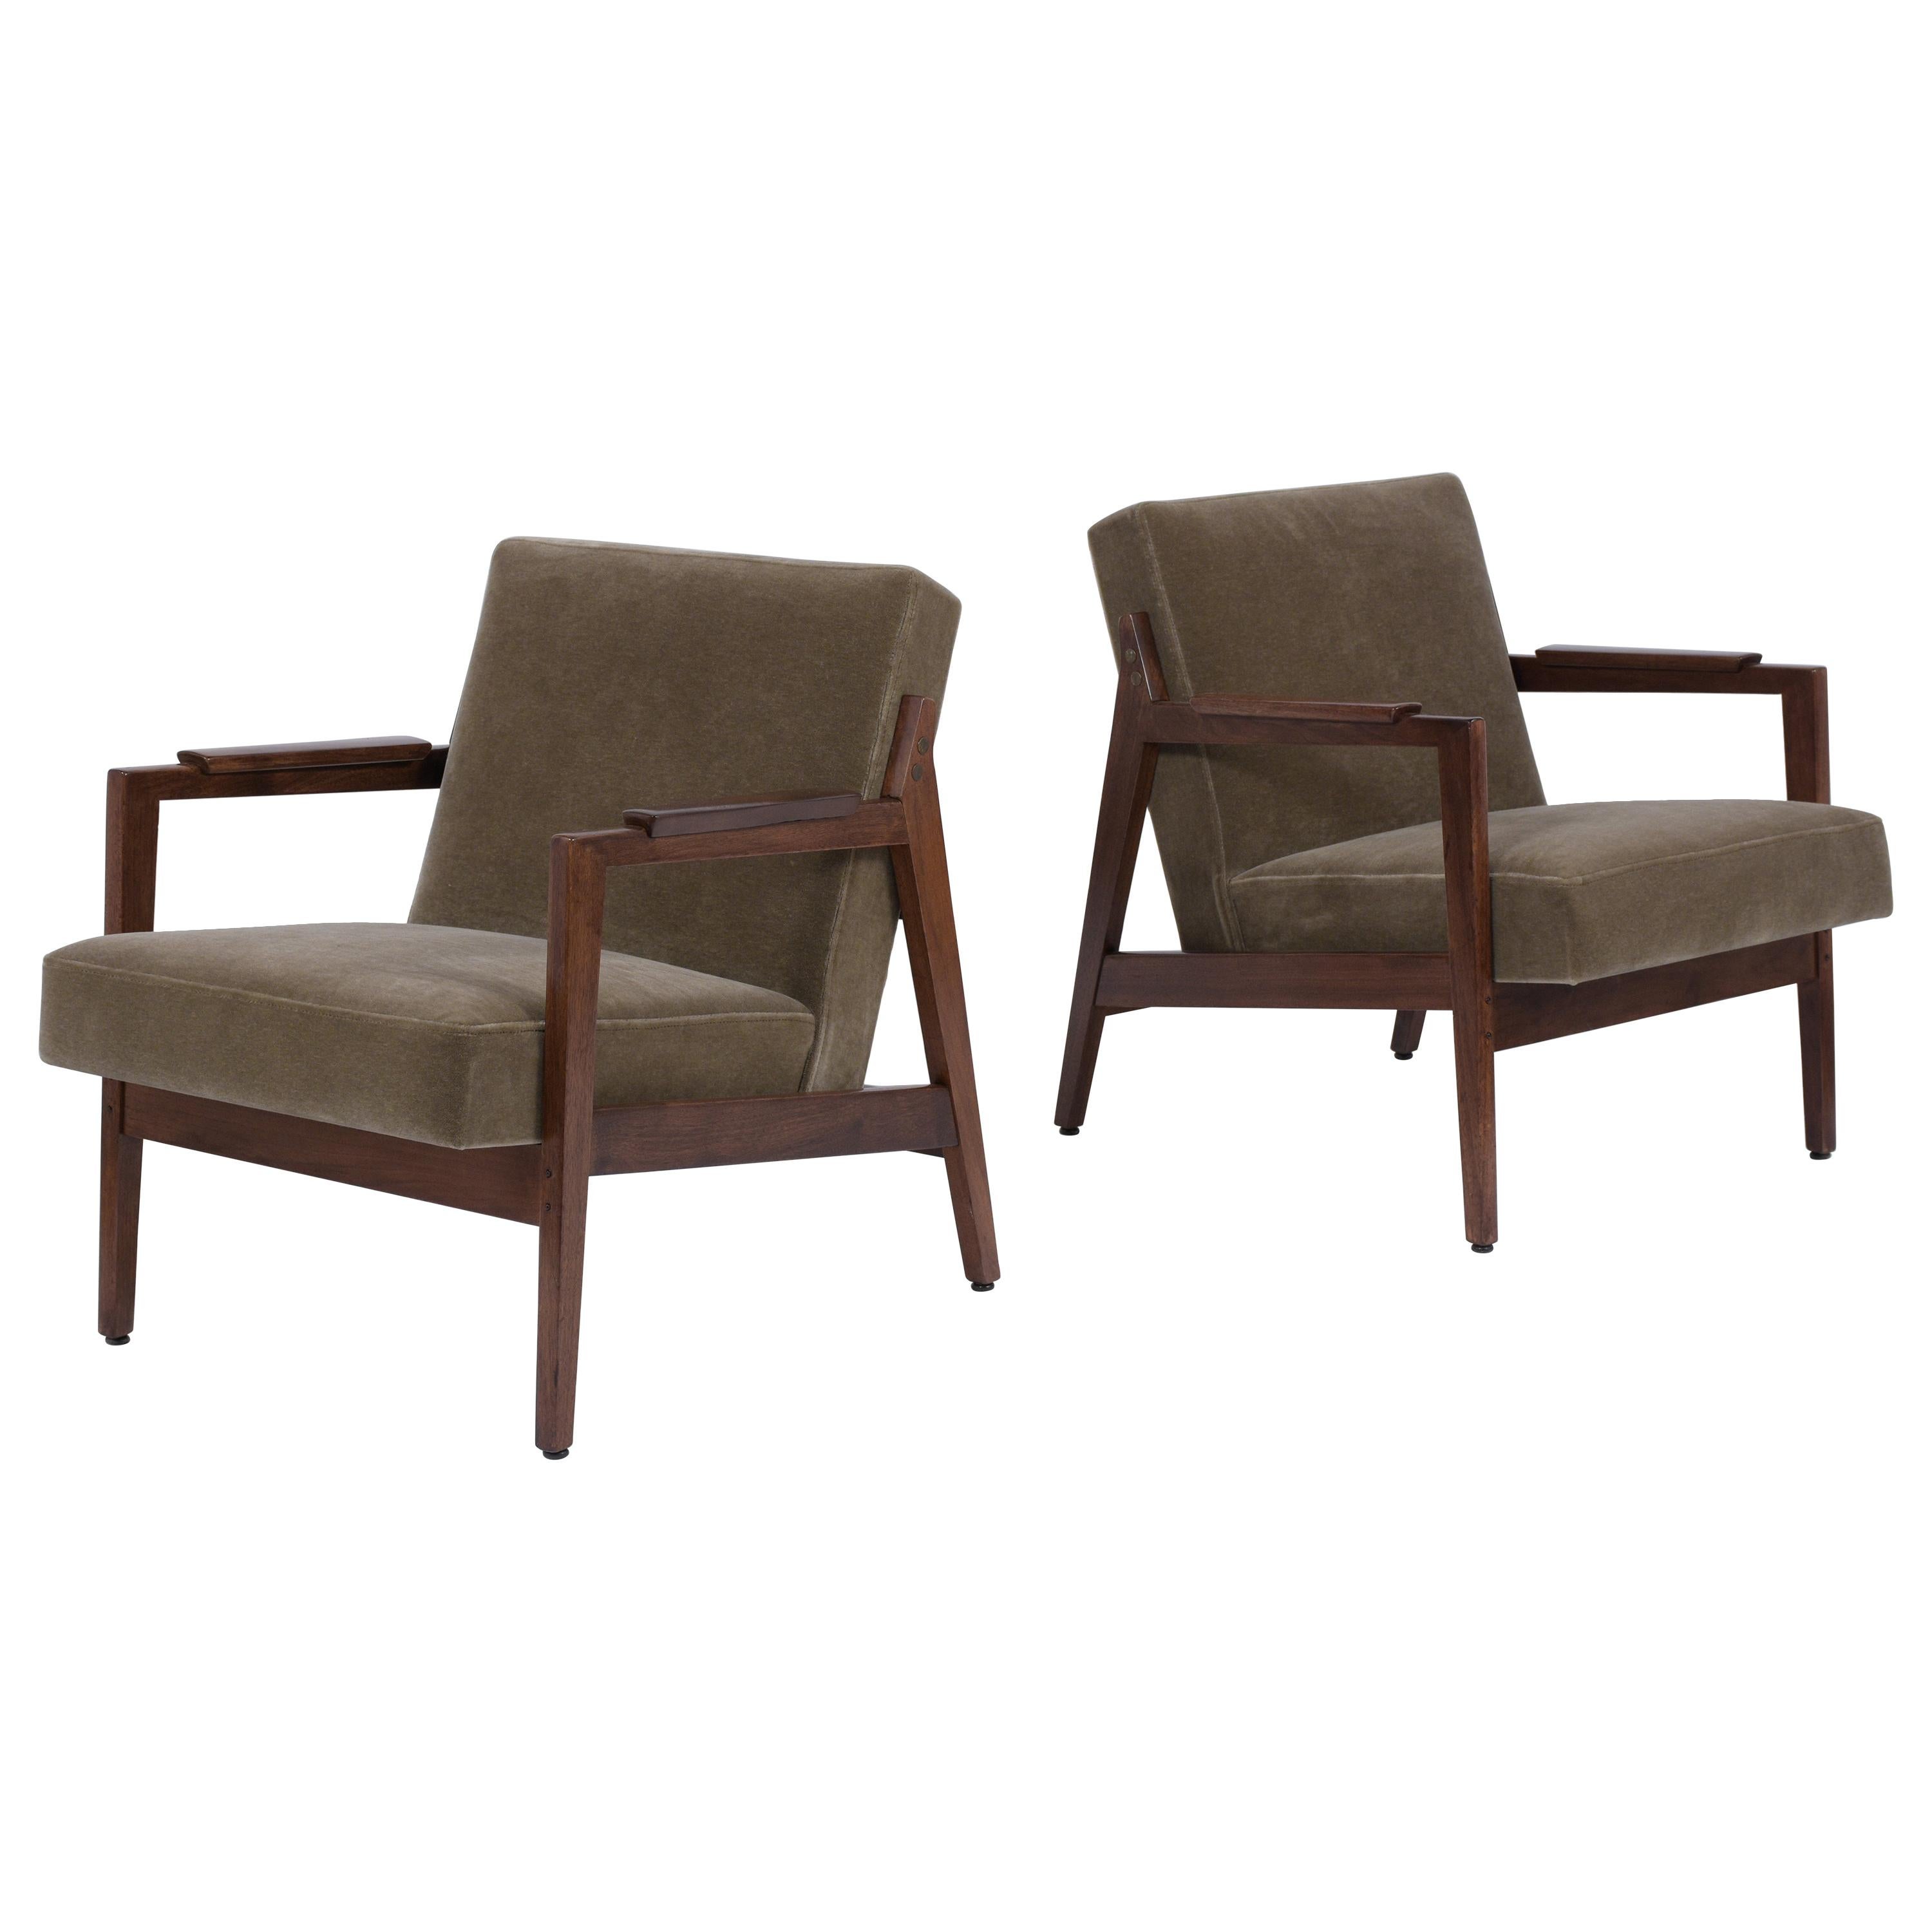 1960's Pair of Mid-Century Modern Walnut Lounge Chairs